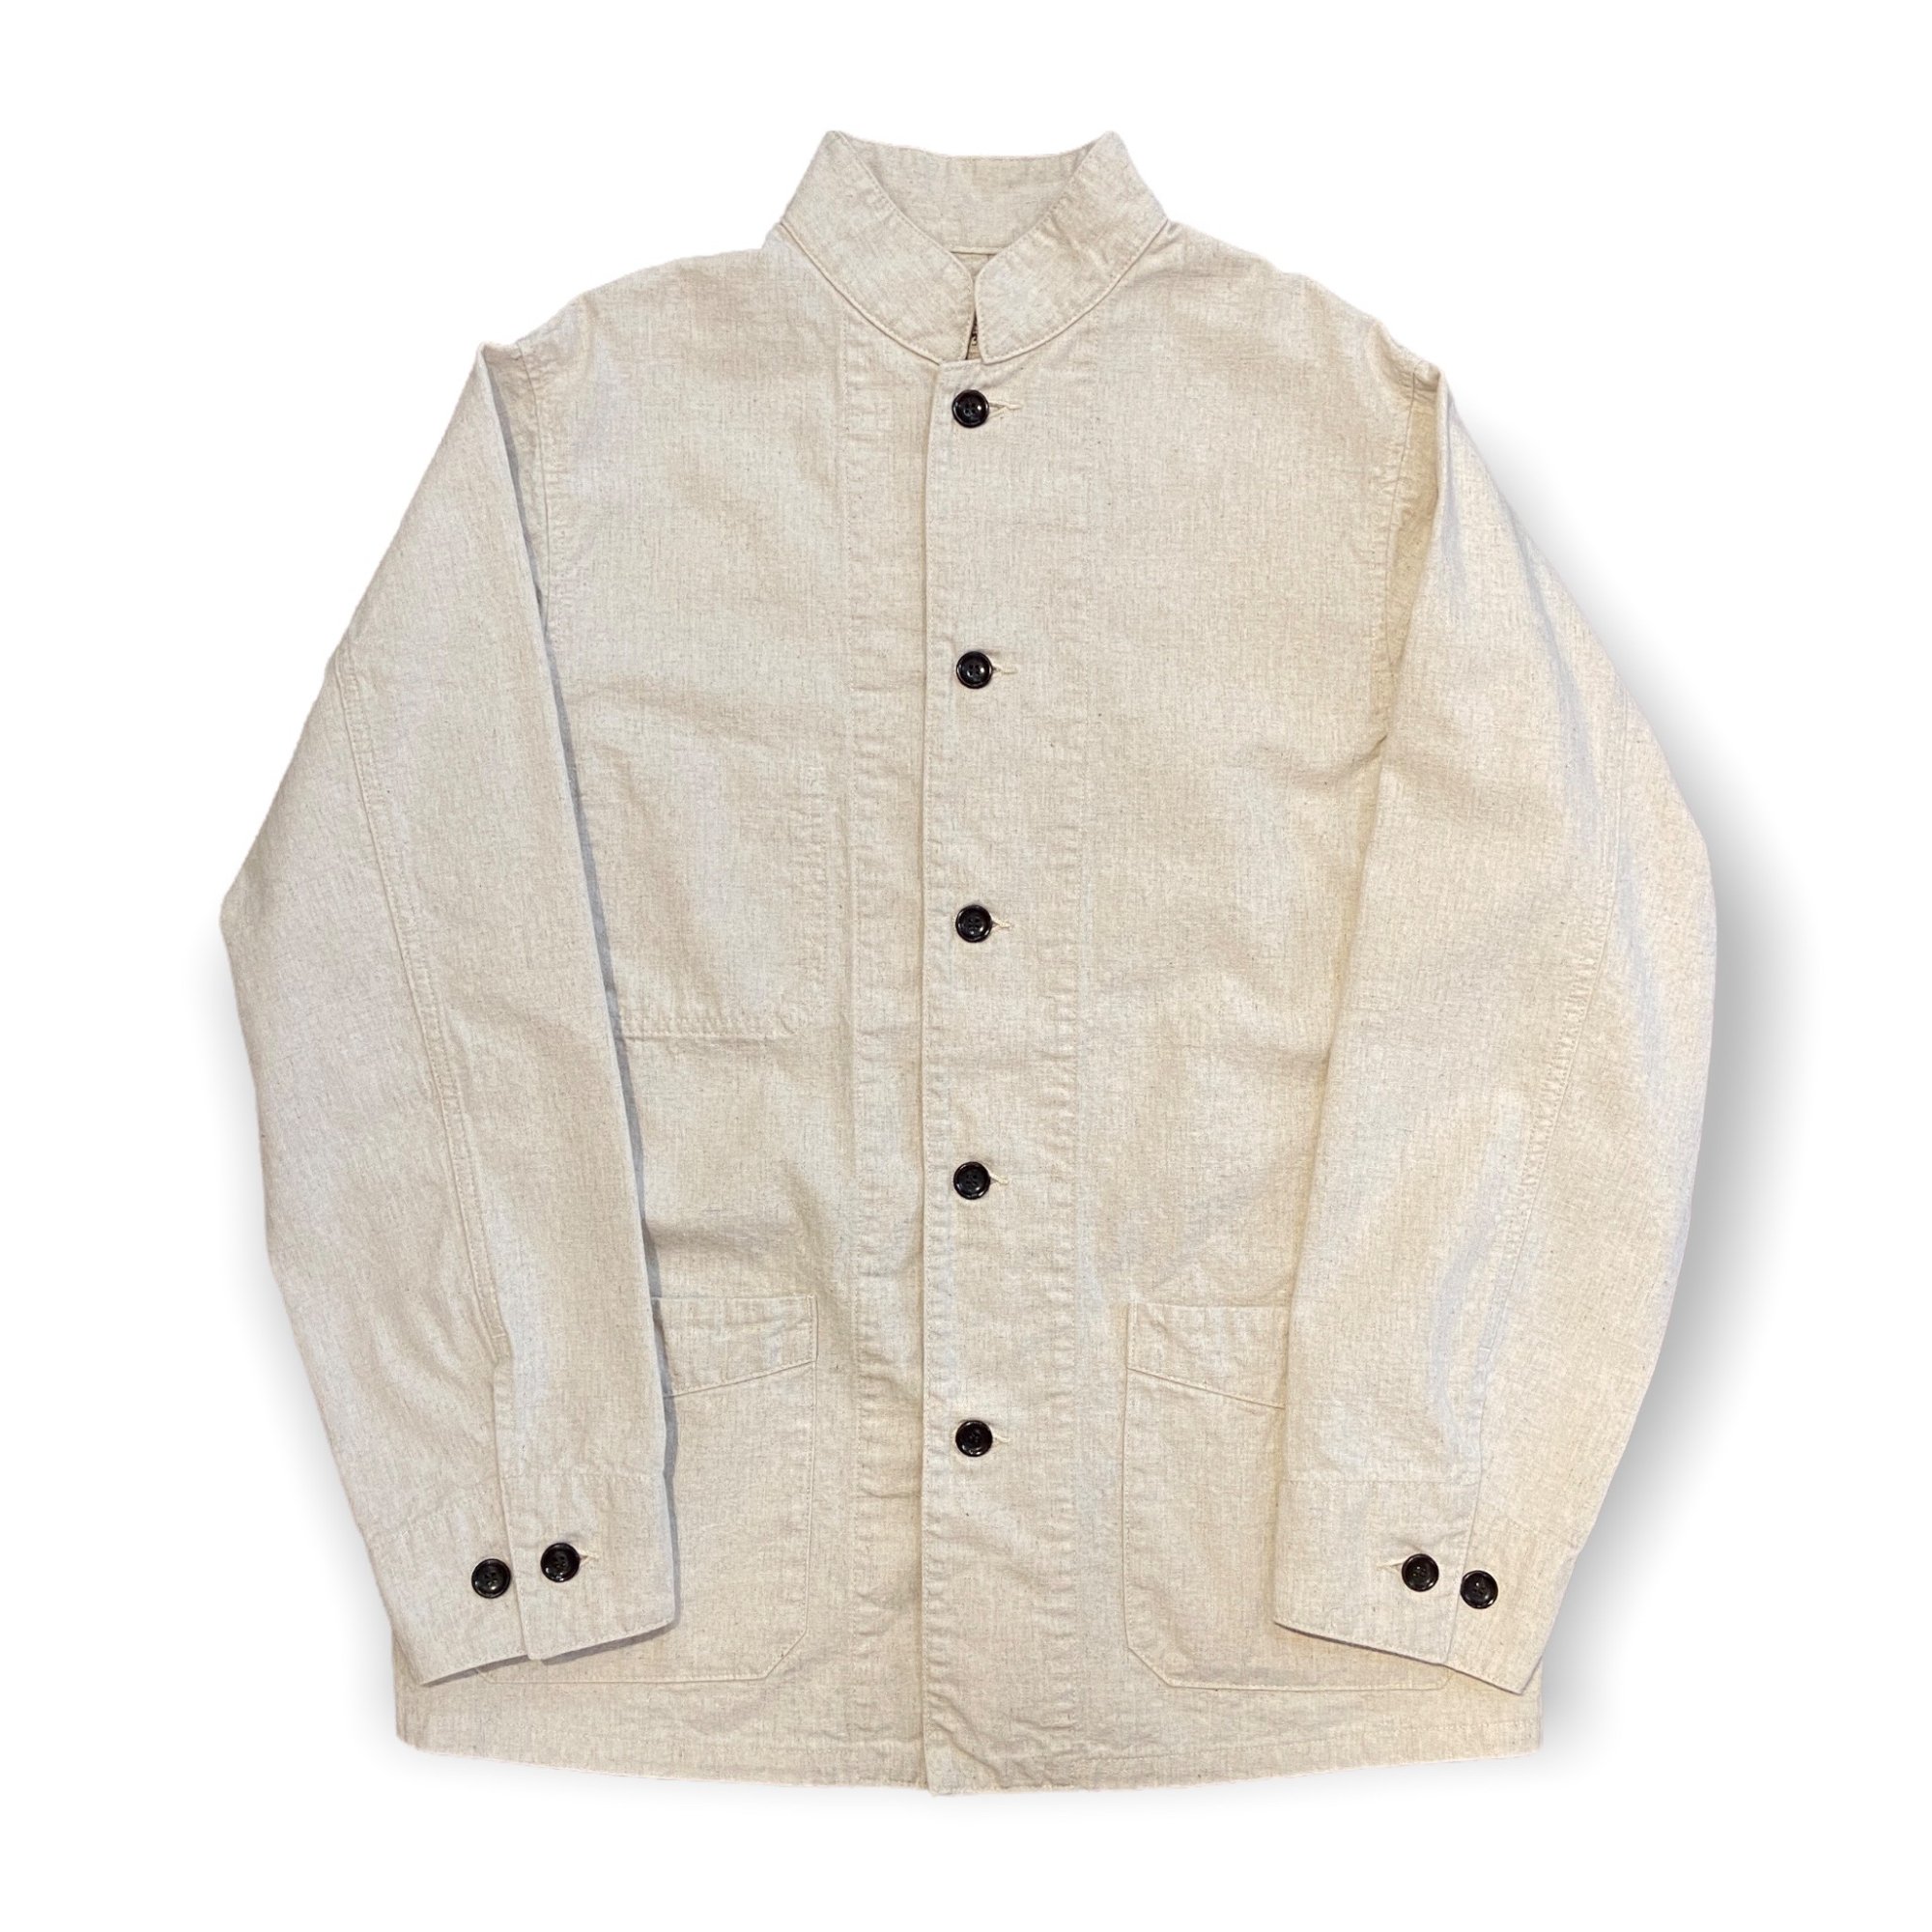 BONCOURA/ボンクラ English Work Jacket Dungaree Cotton Linen